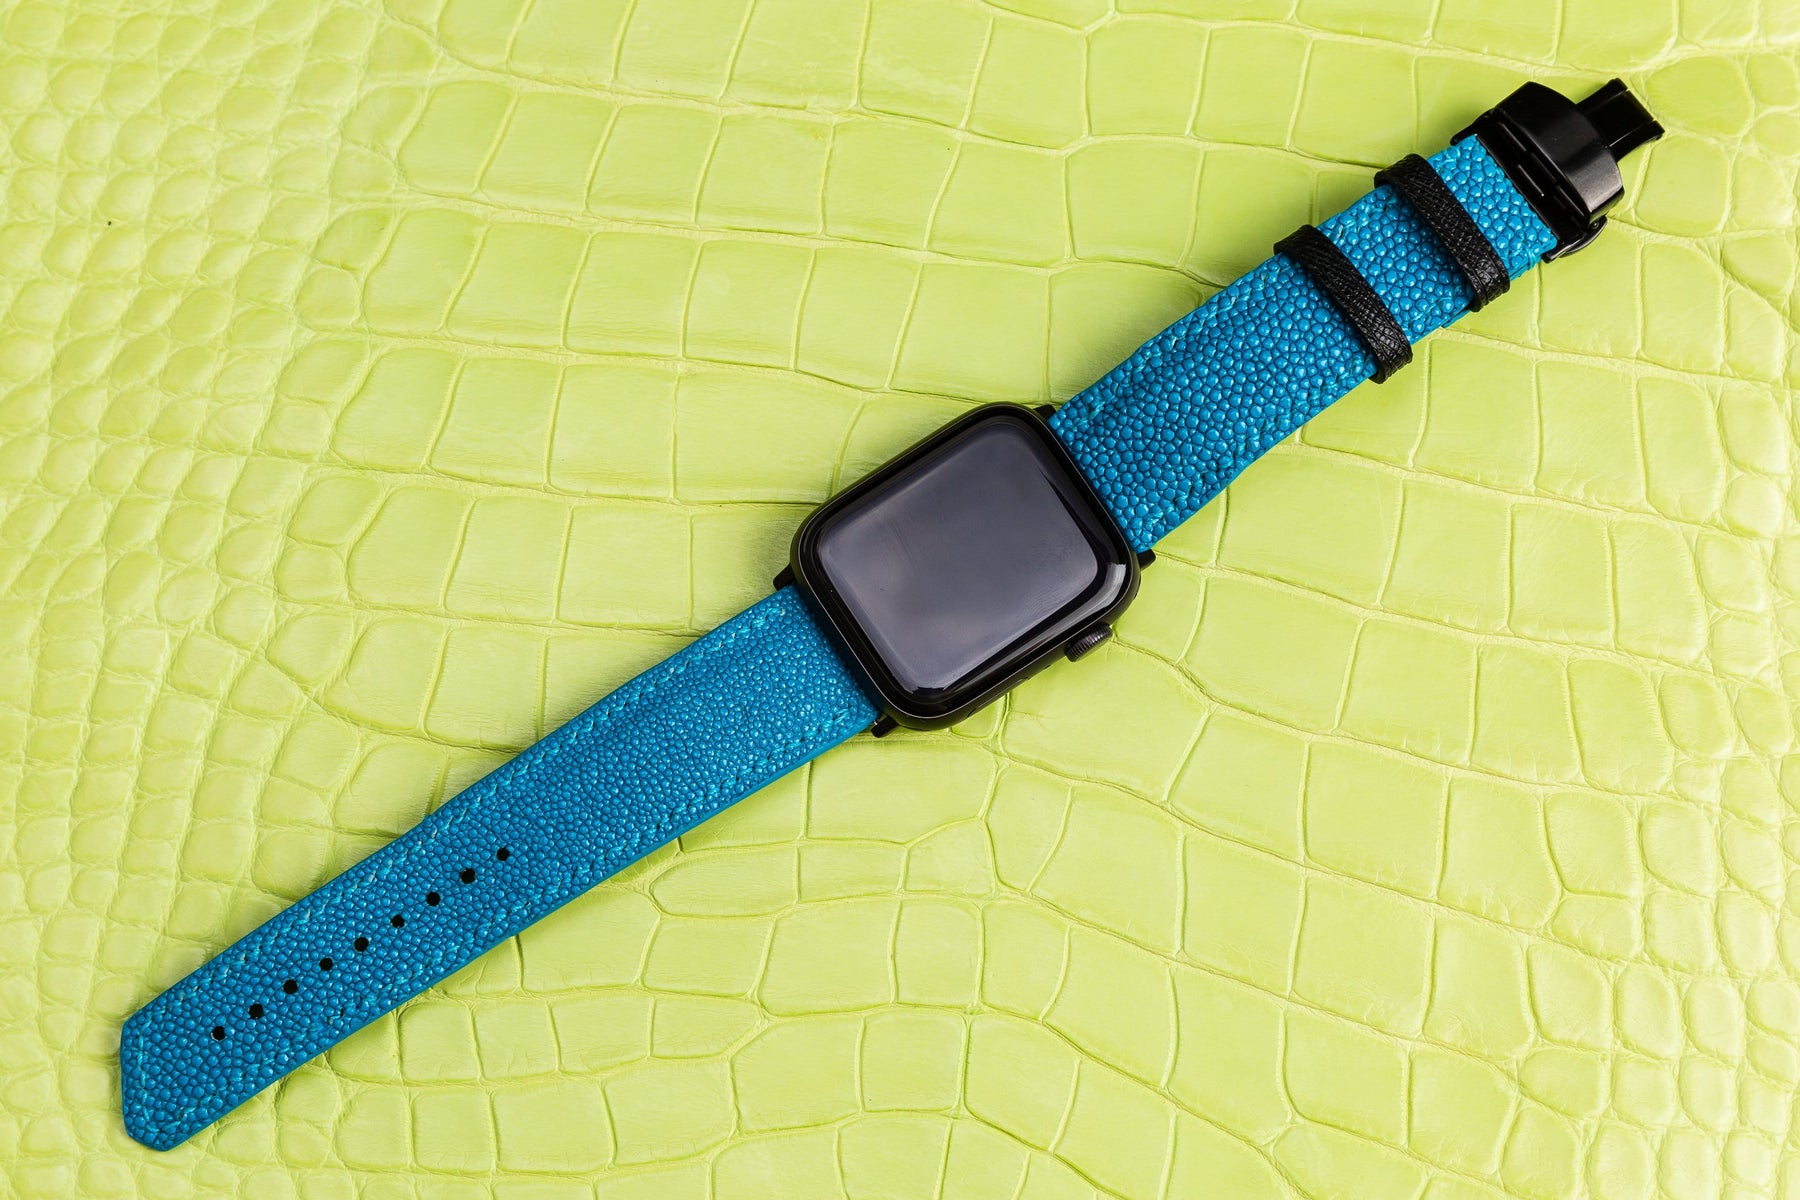 Tamagini Leather Bespoke Luxury Apple Watch Strap | Tamagini Leather